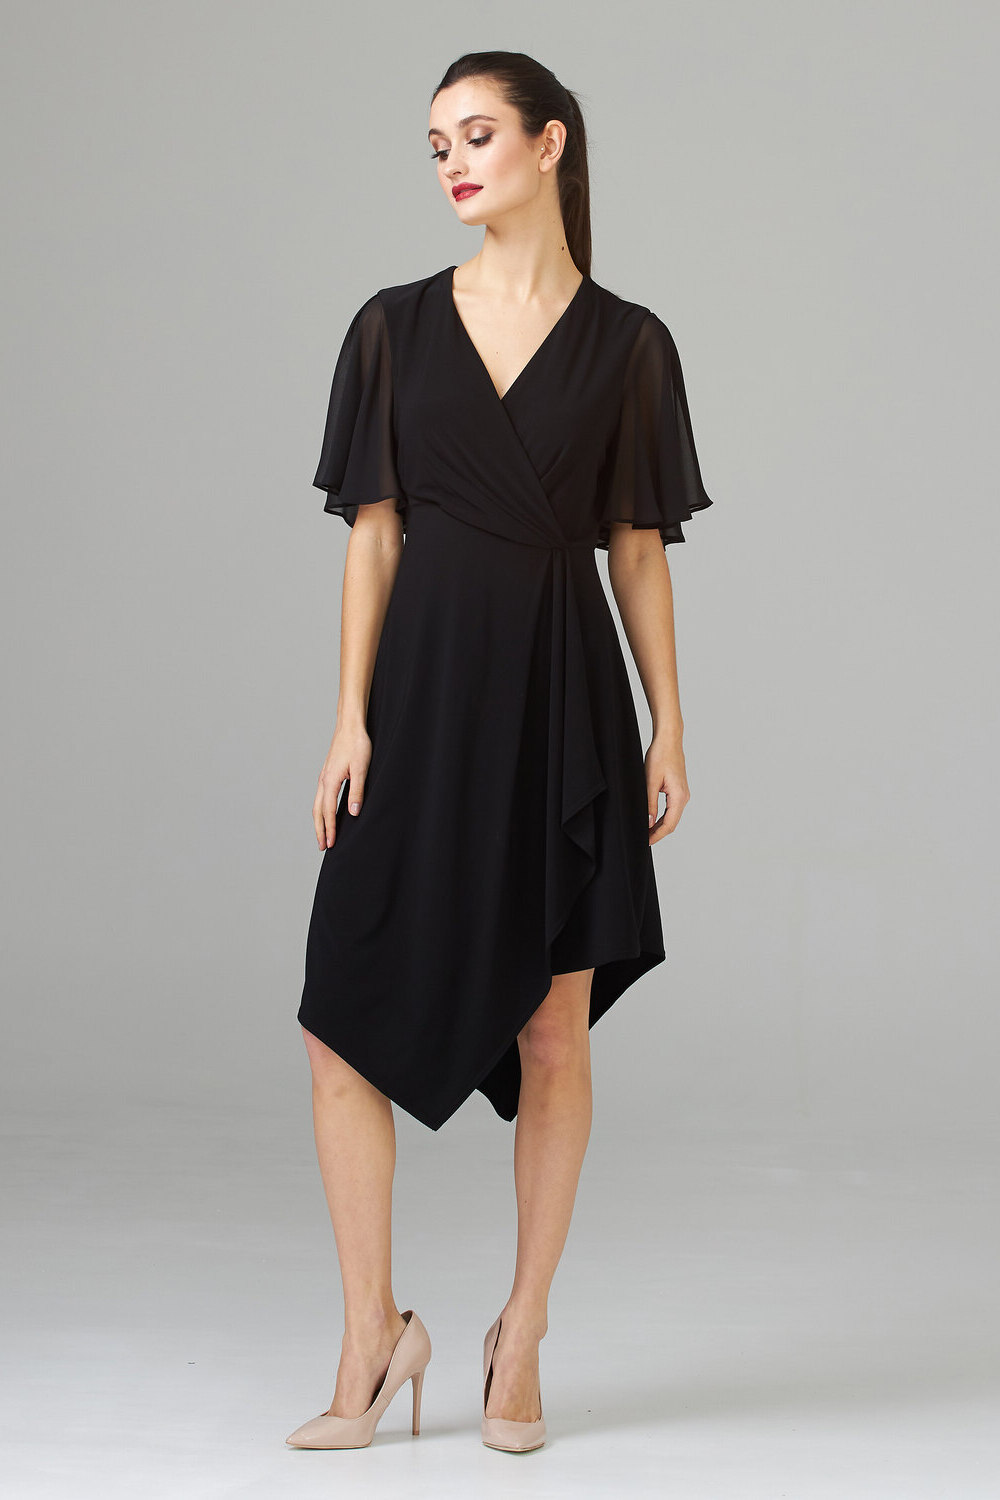 Joseph Ribkoff Dress Style 201262. Black